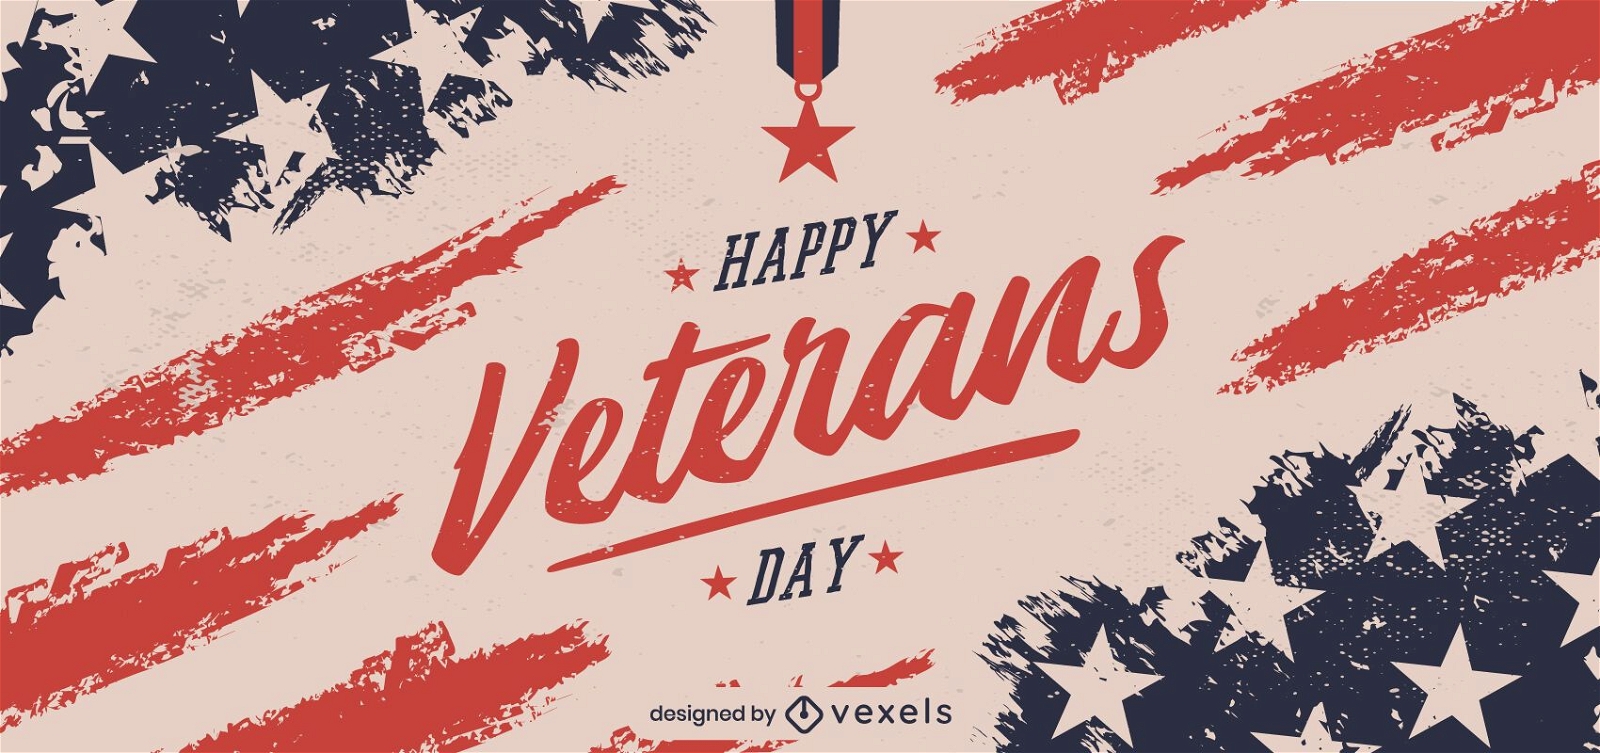 Happy veterans day banner design